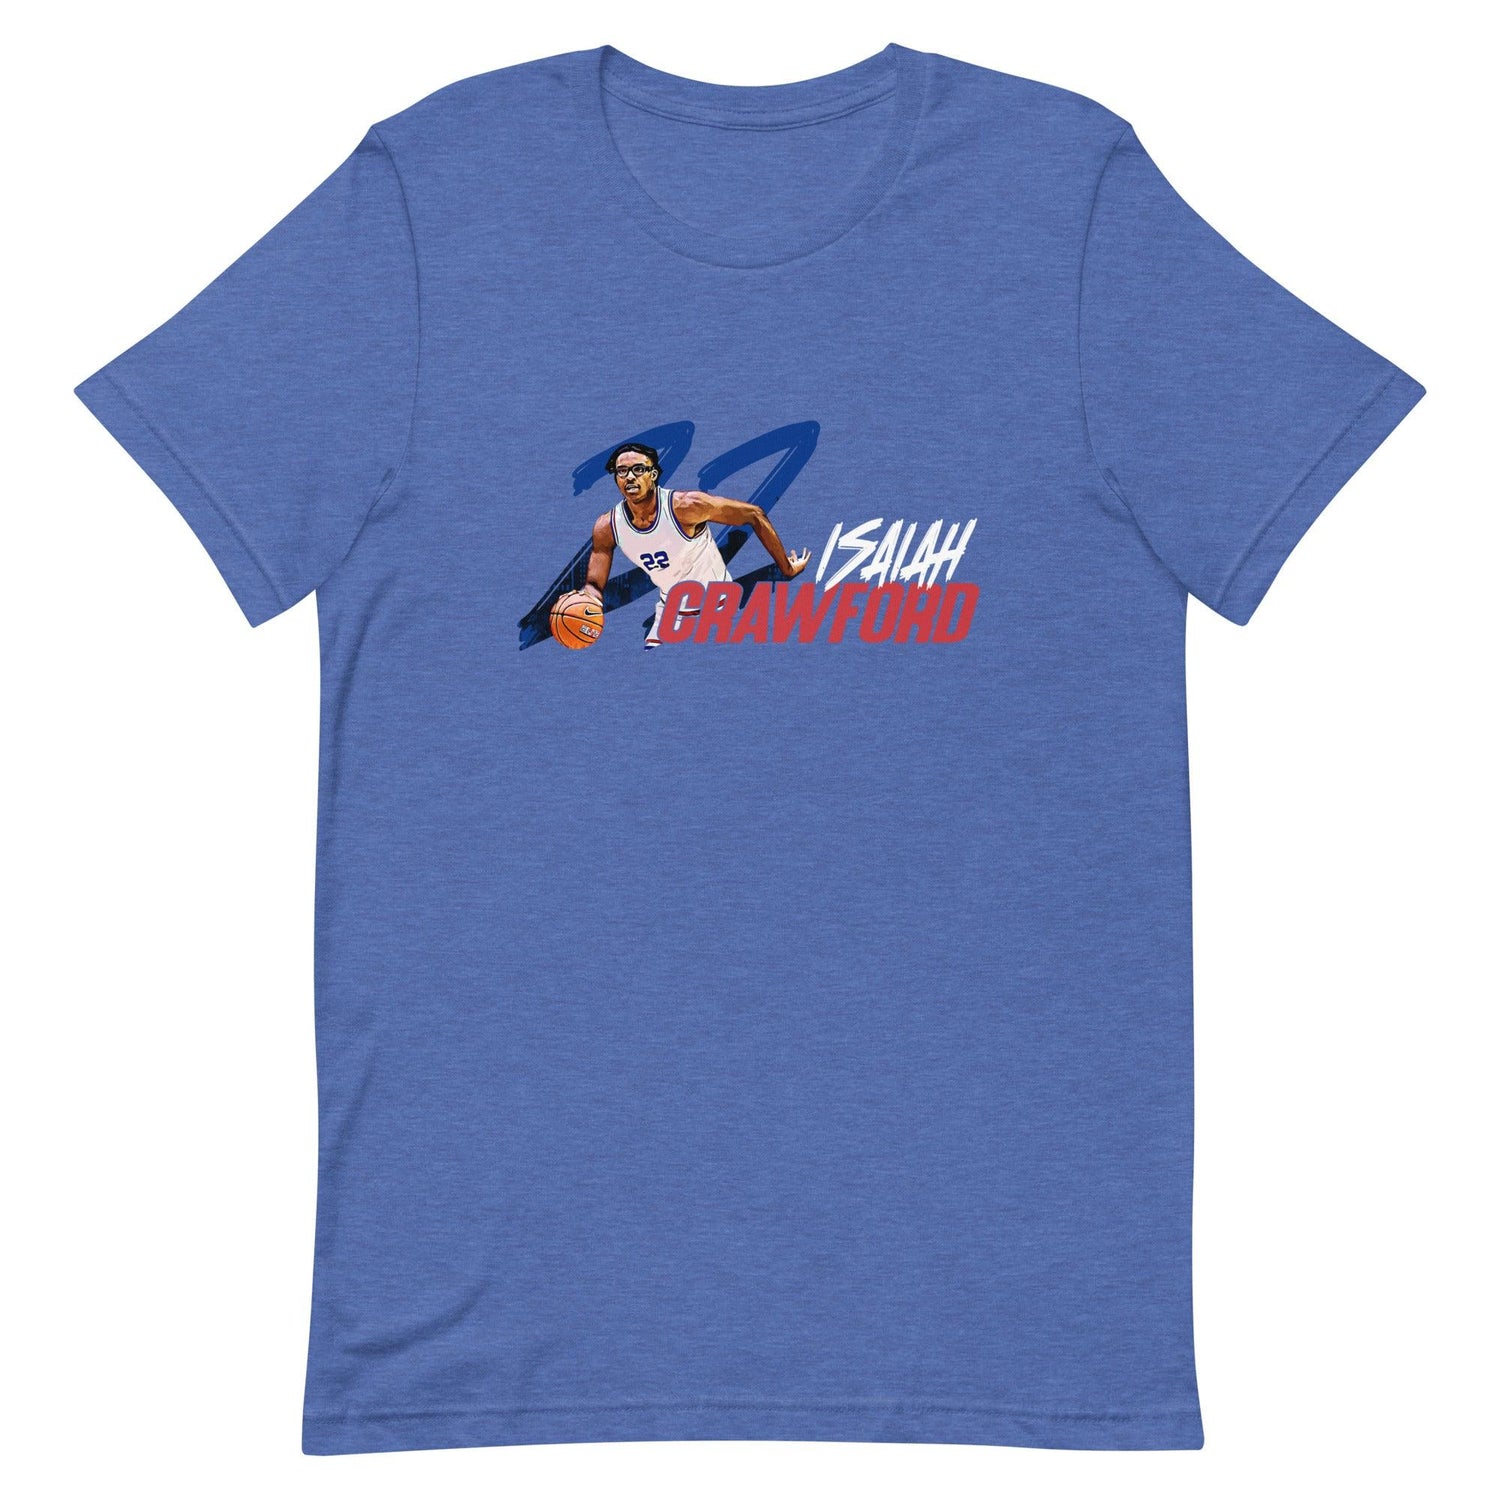 Isaiah Crawford "Gameday" t-shirt - Fan Arch